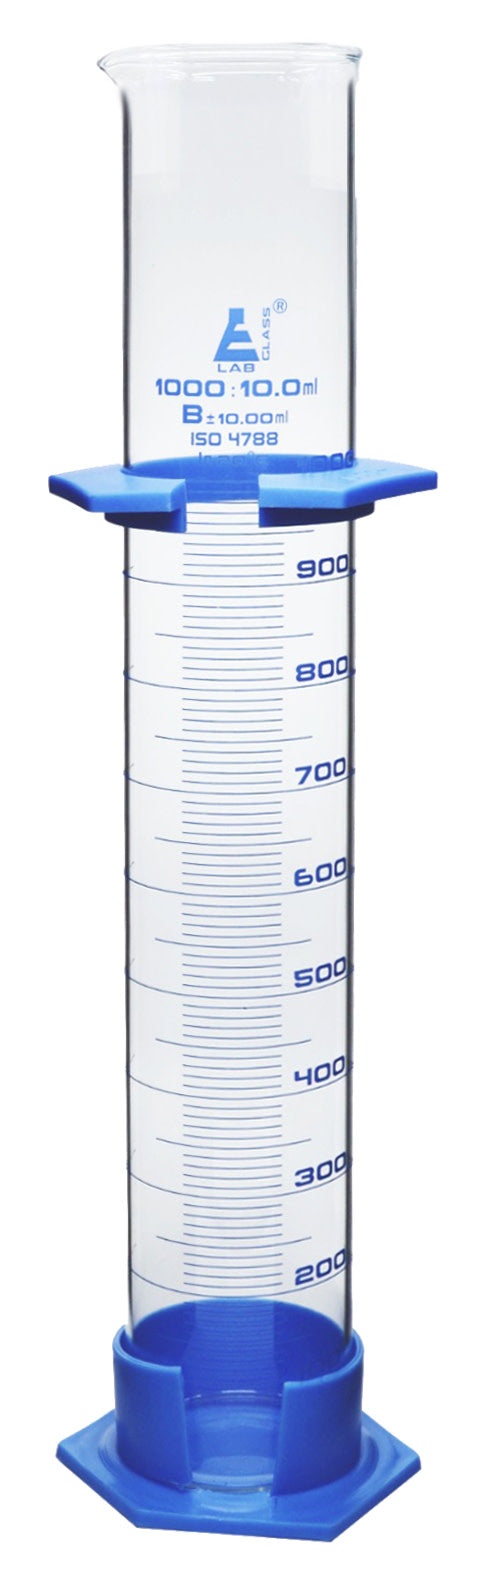 (Discontinued) Measuring Cylinder, 1000ml - Class B - Detachable, Plastic Hexagonal Base & Protective Collar - Blue Graduations - Borosilicate Glass - Eisco Labs